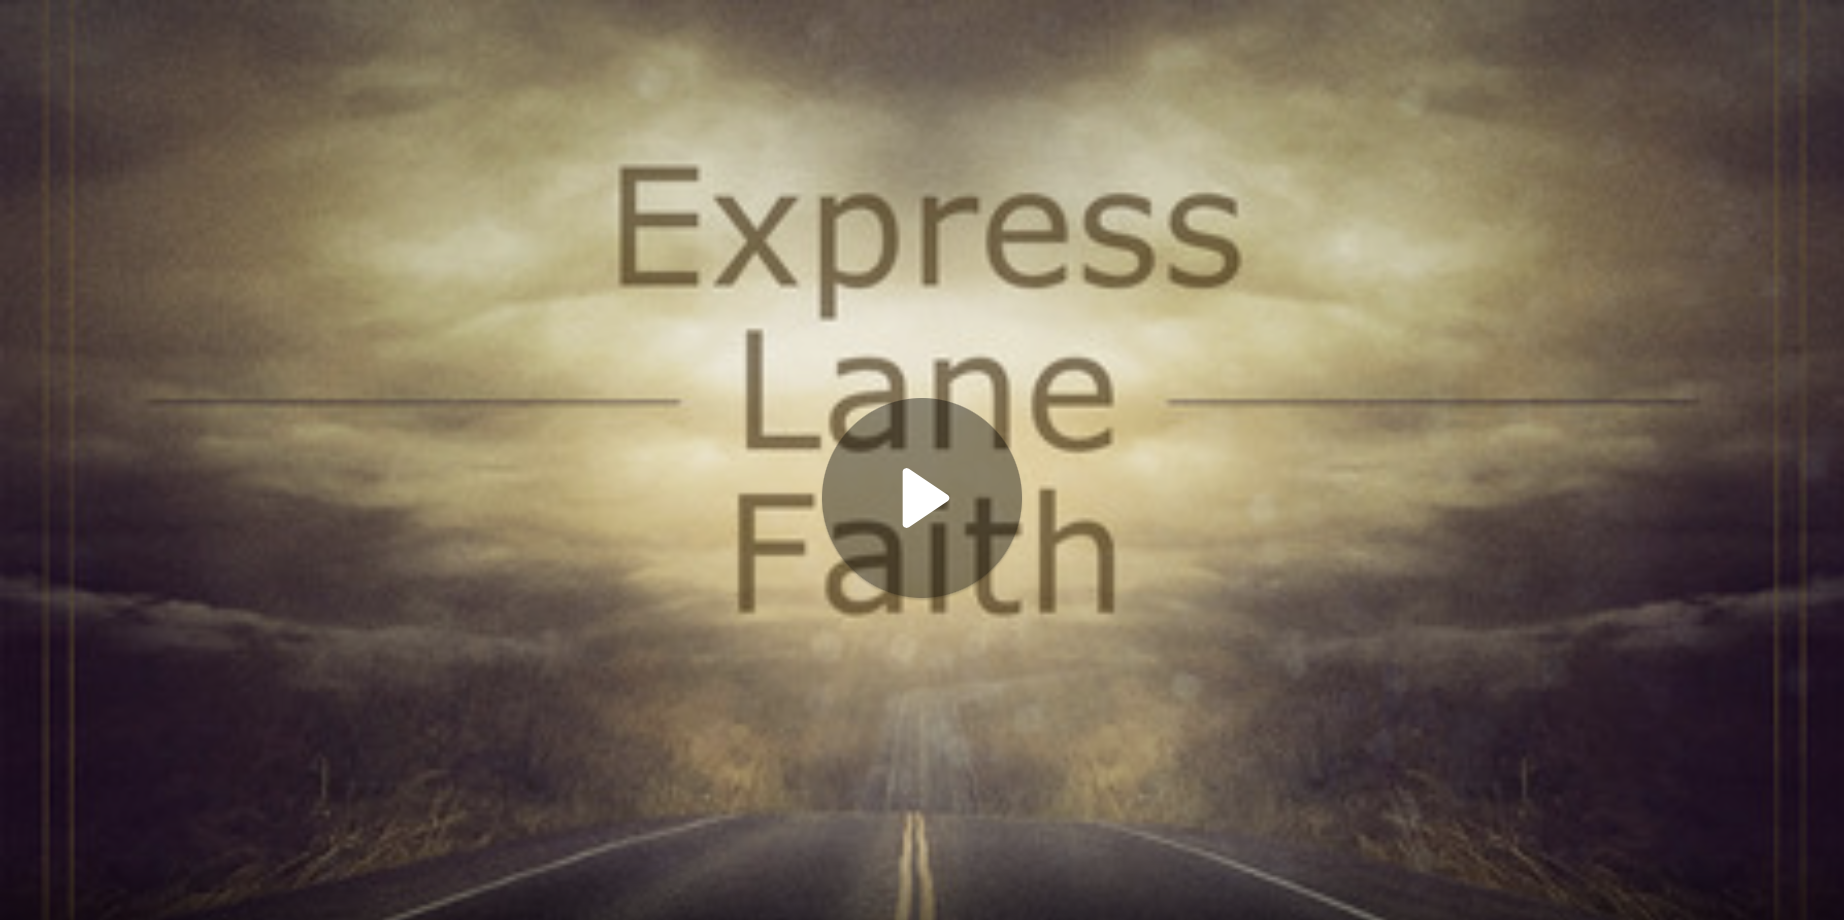 Express Lane Faith